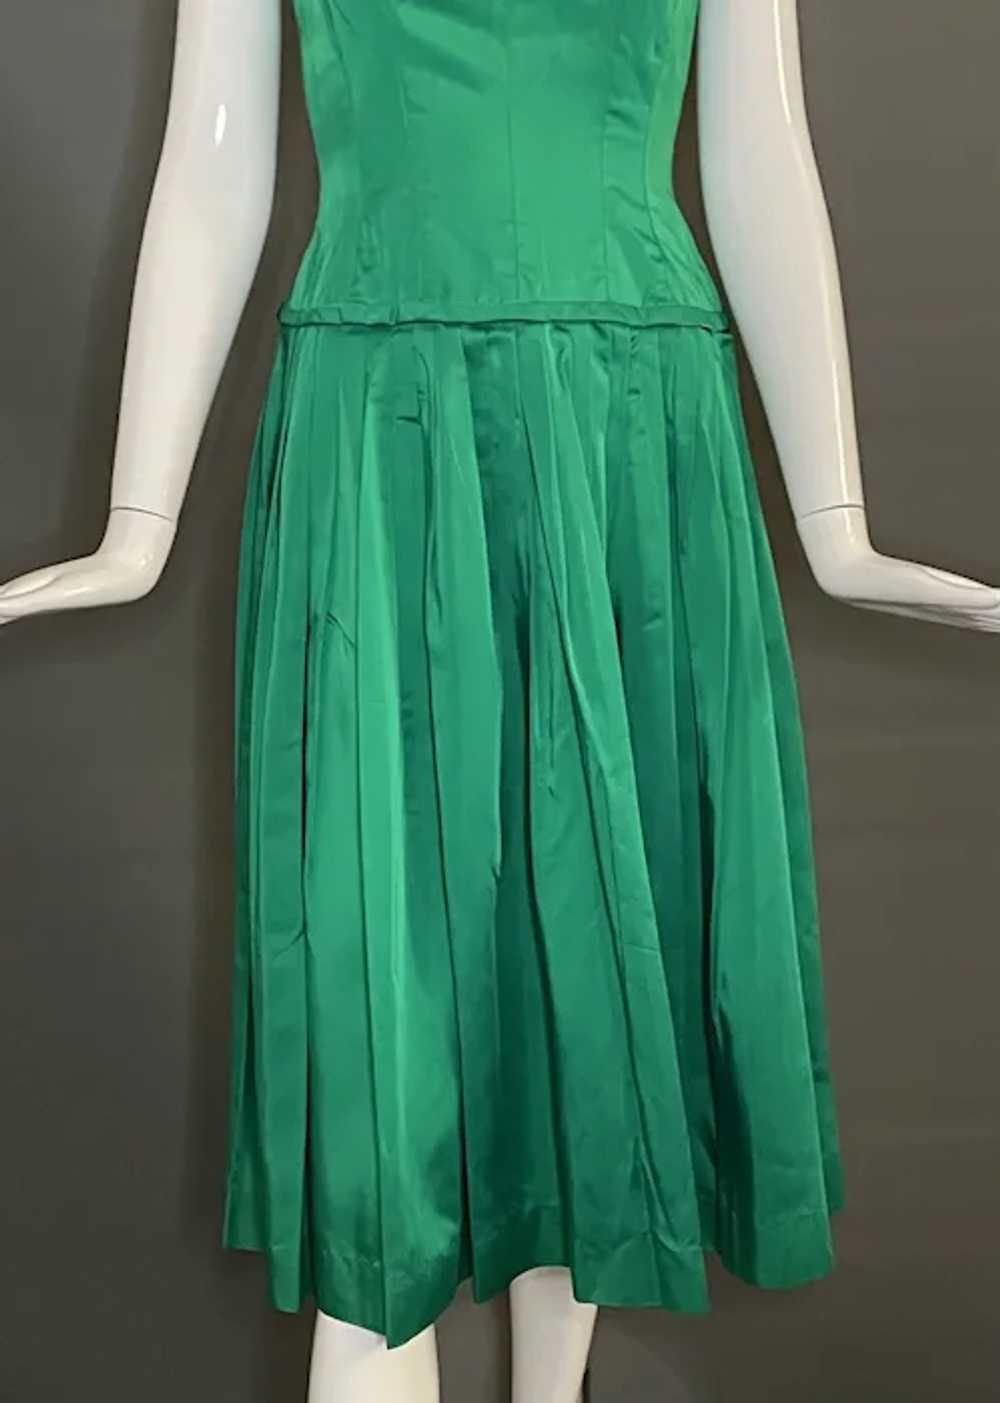 Emerald Green Vintage Satin Party Dress XS - image 7